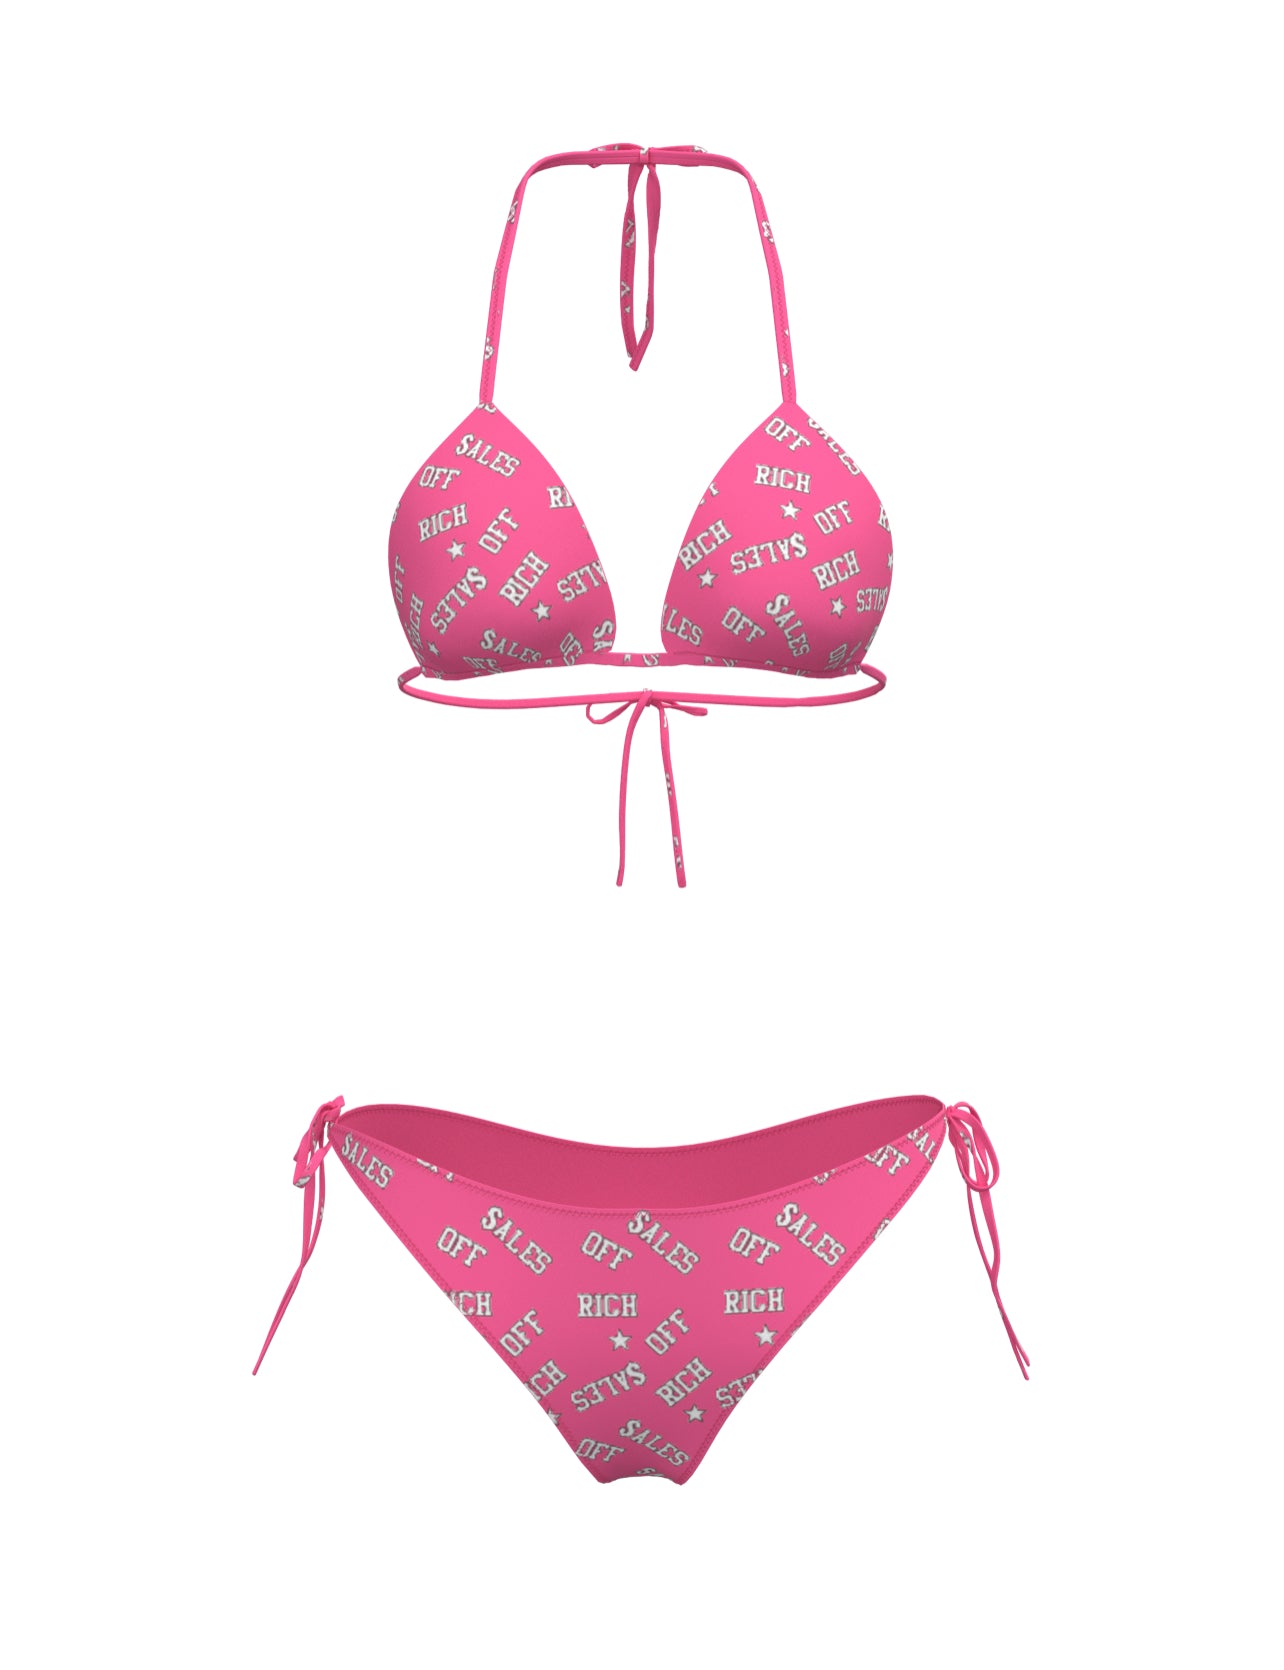 Payola Rich Off Sales Bikini Set (Pink)